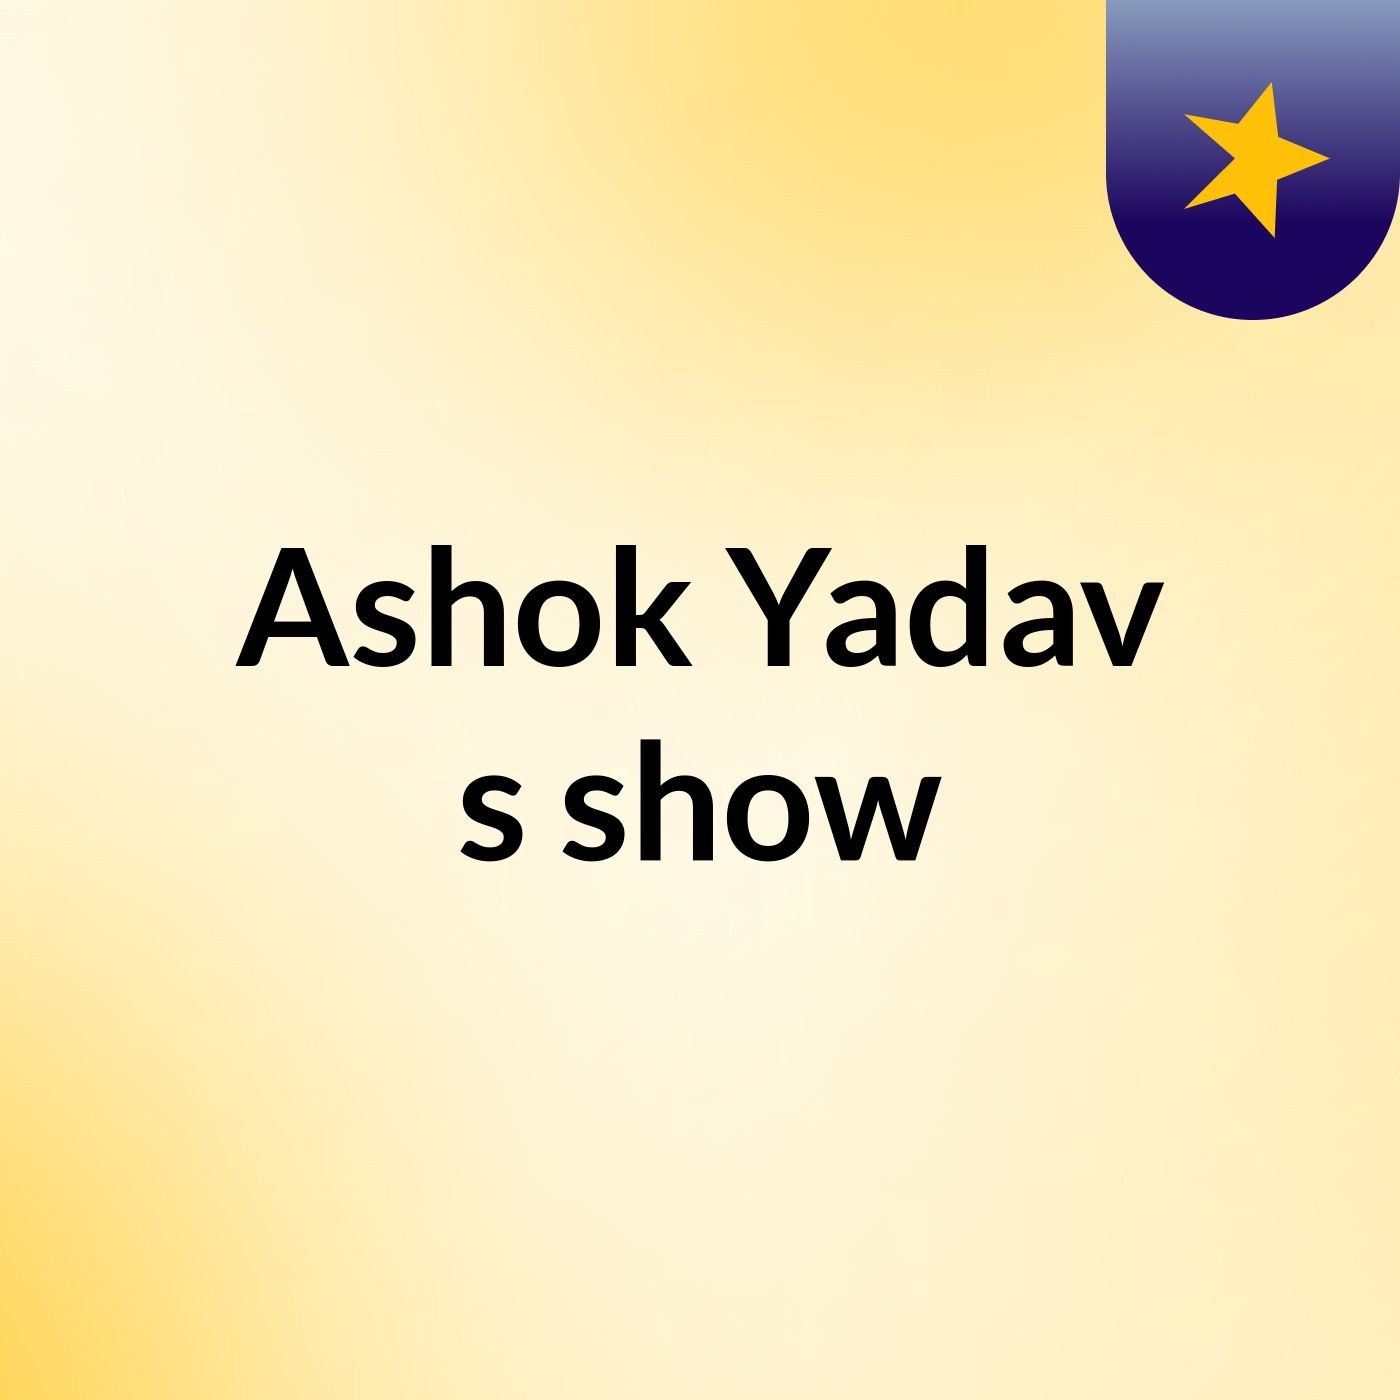 Ashok Yadav's show